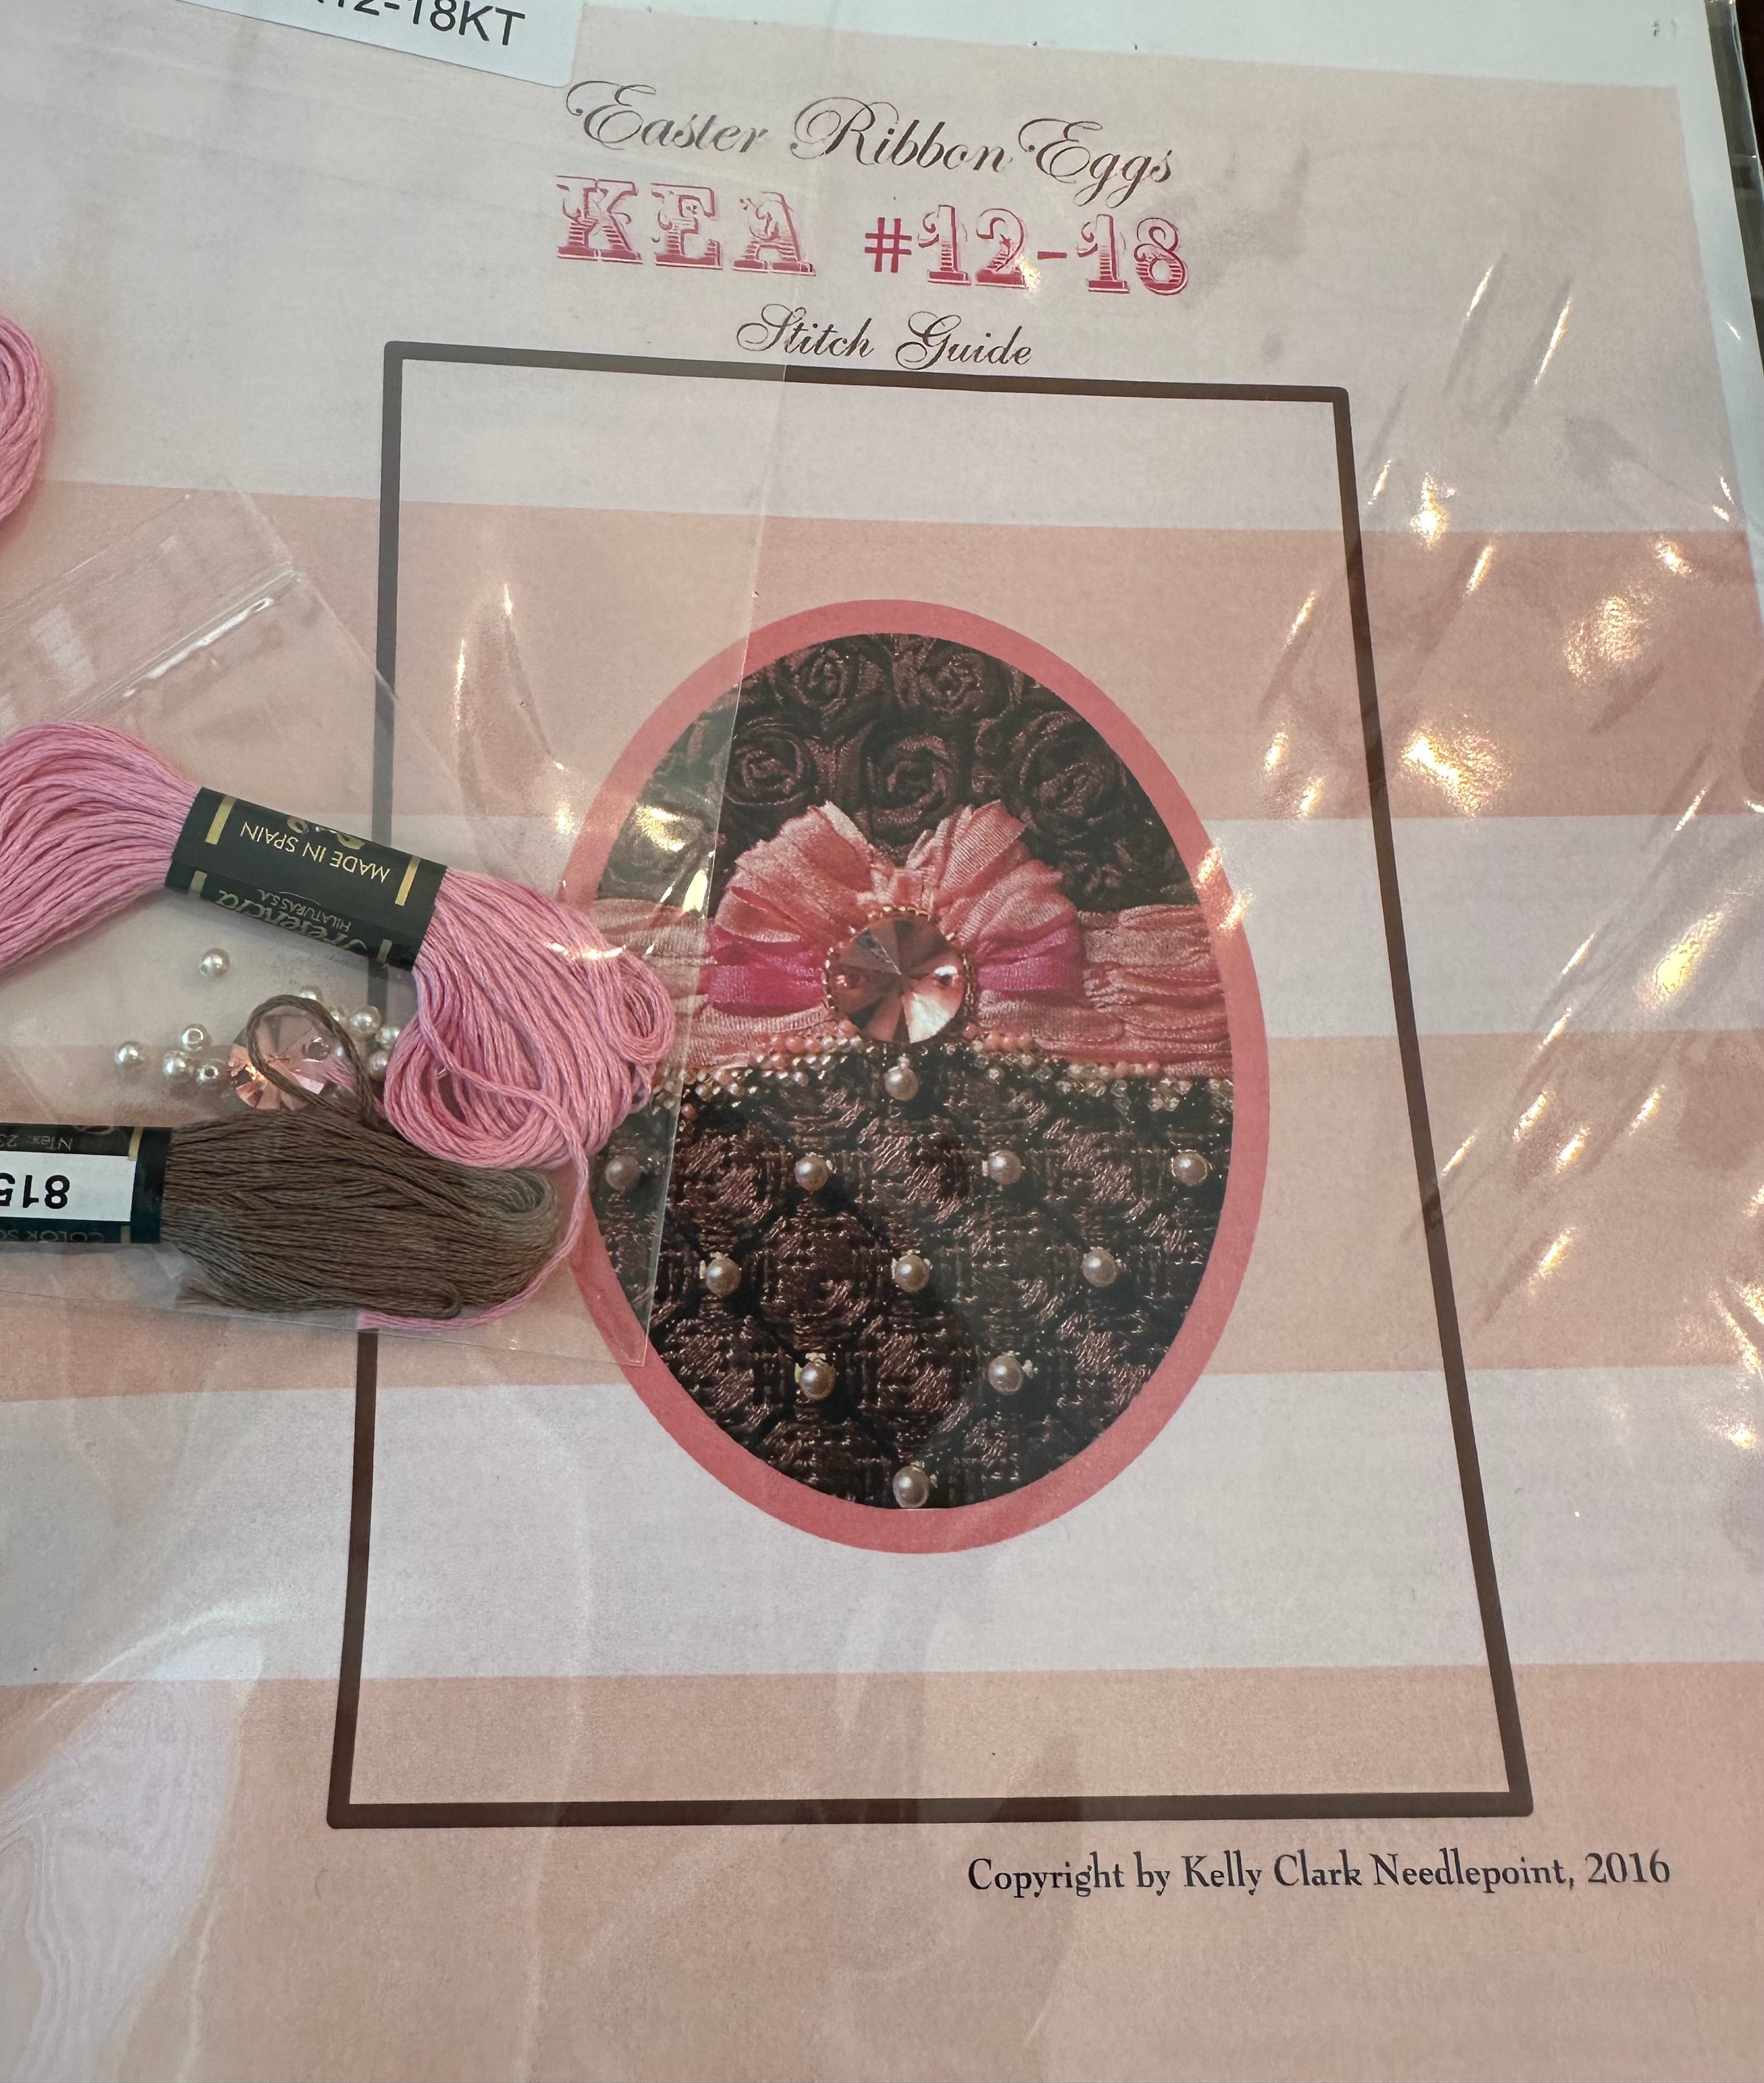 Kelly Clark KEA12-18 Chocolate Ribbon Egg w/ Embellishment Kit and Stitch Guide